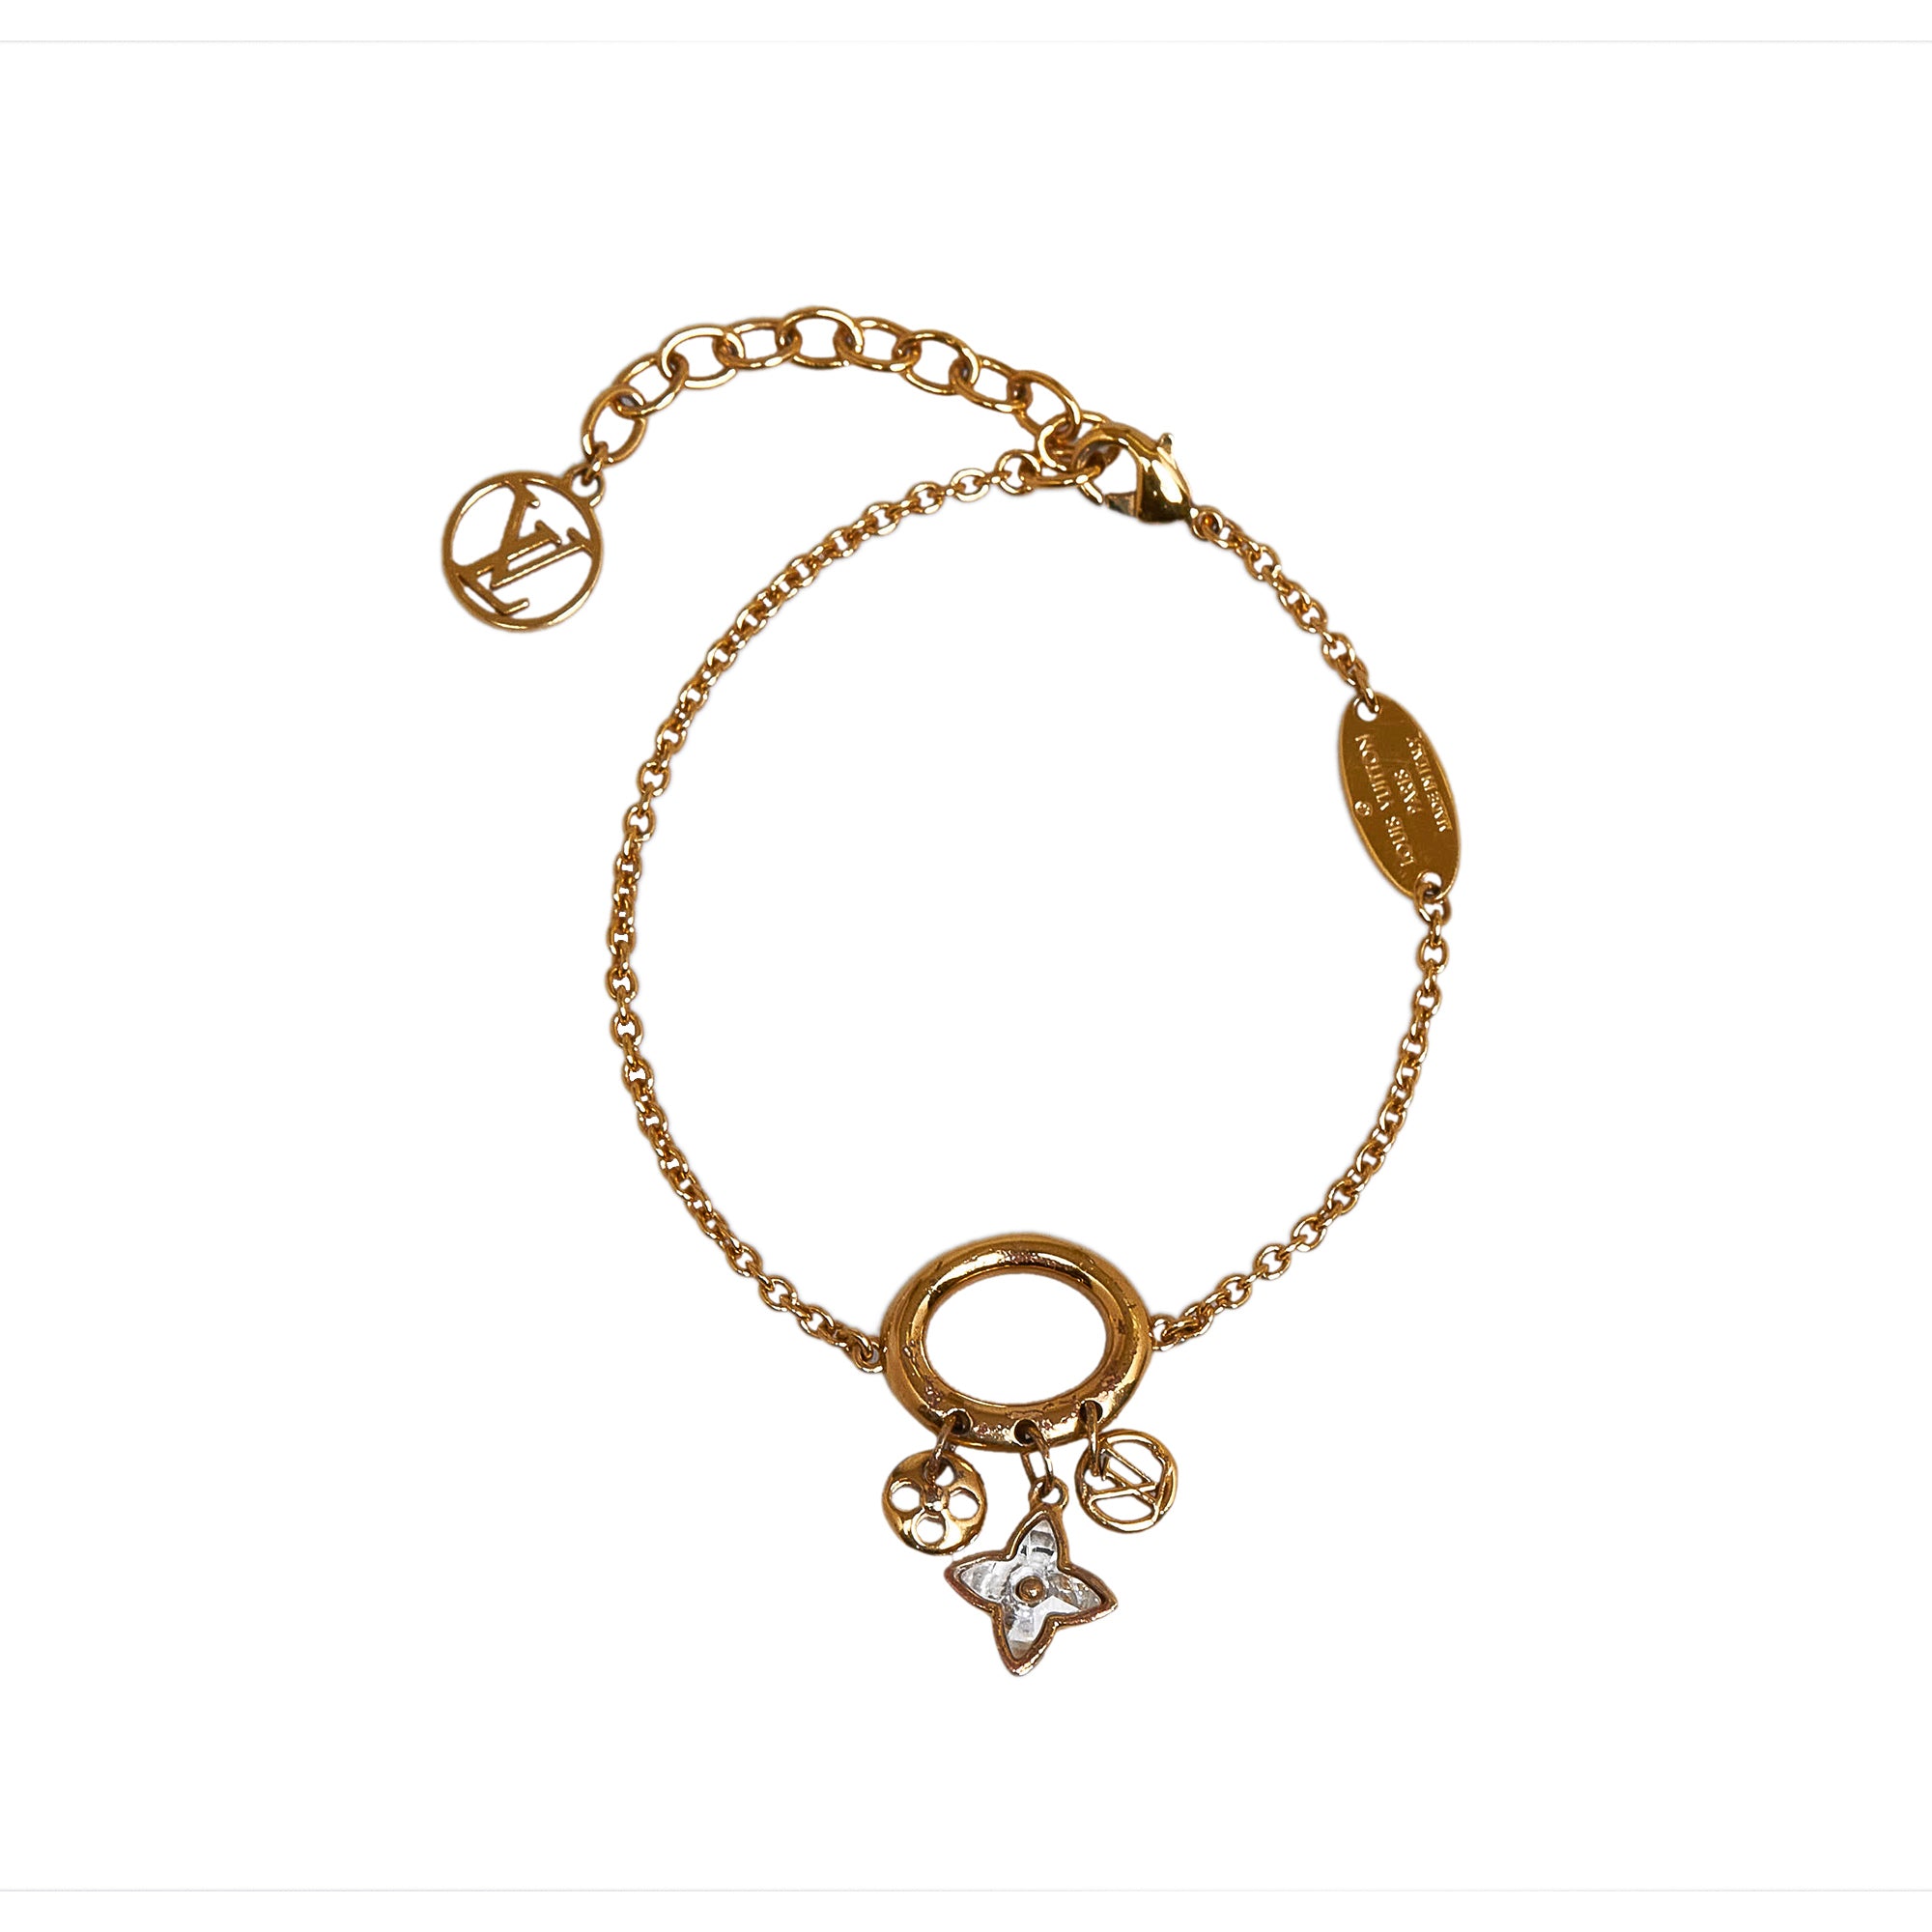 Louis Vuitton Blooming Bracelet